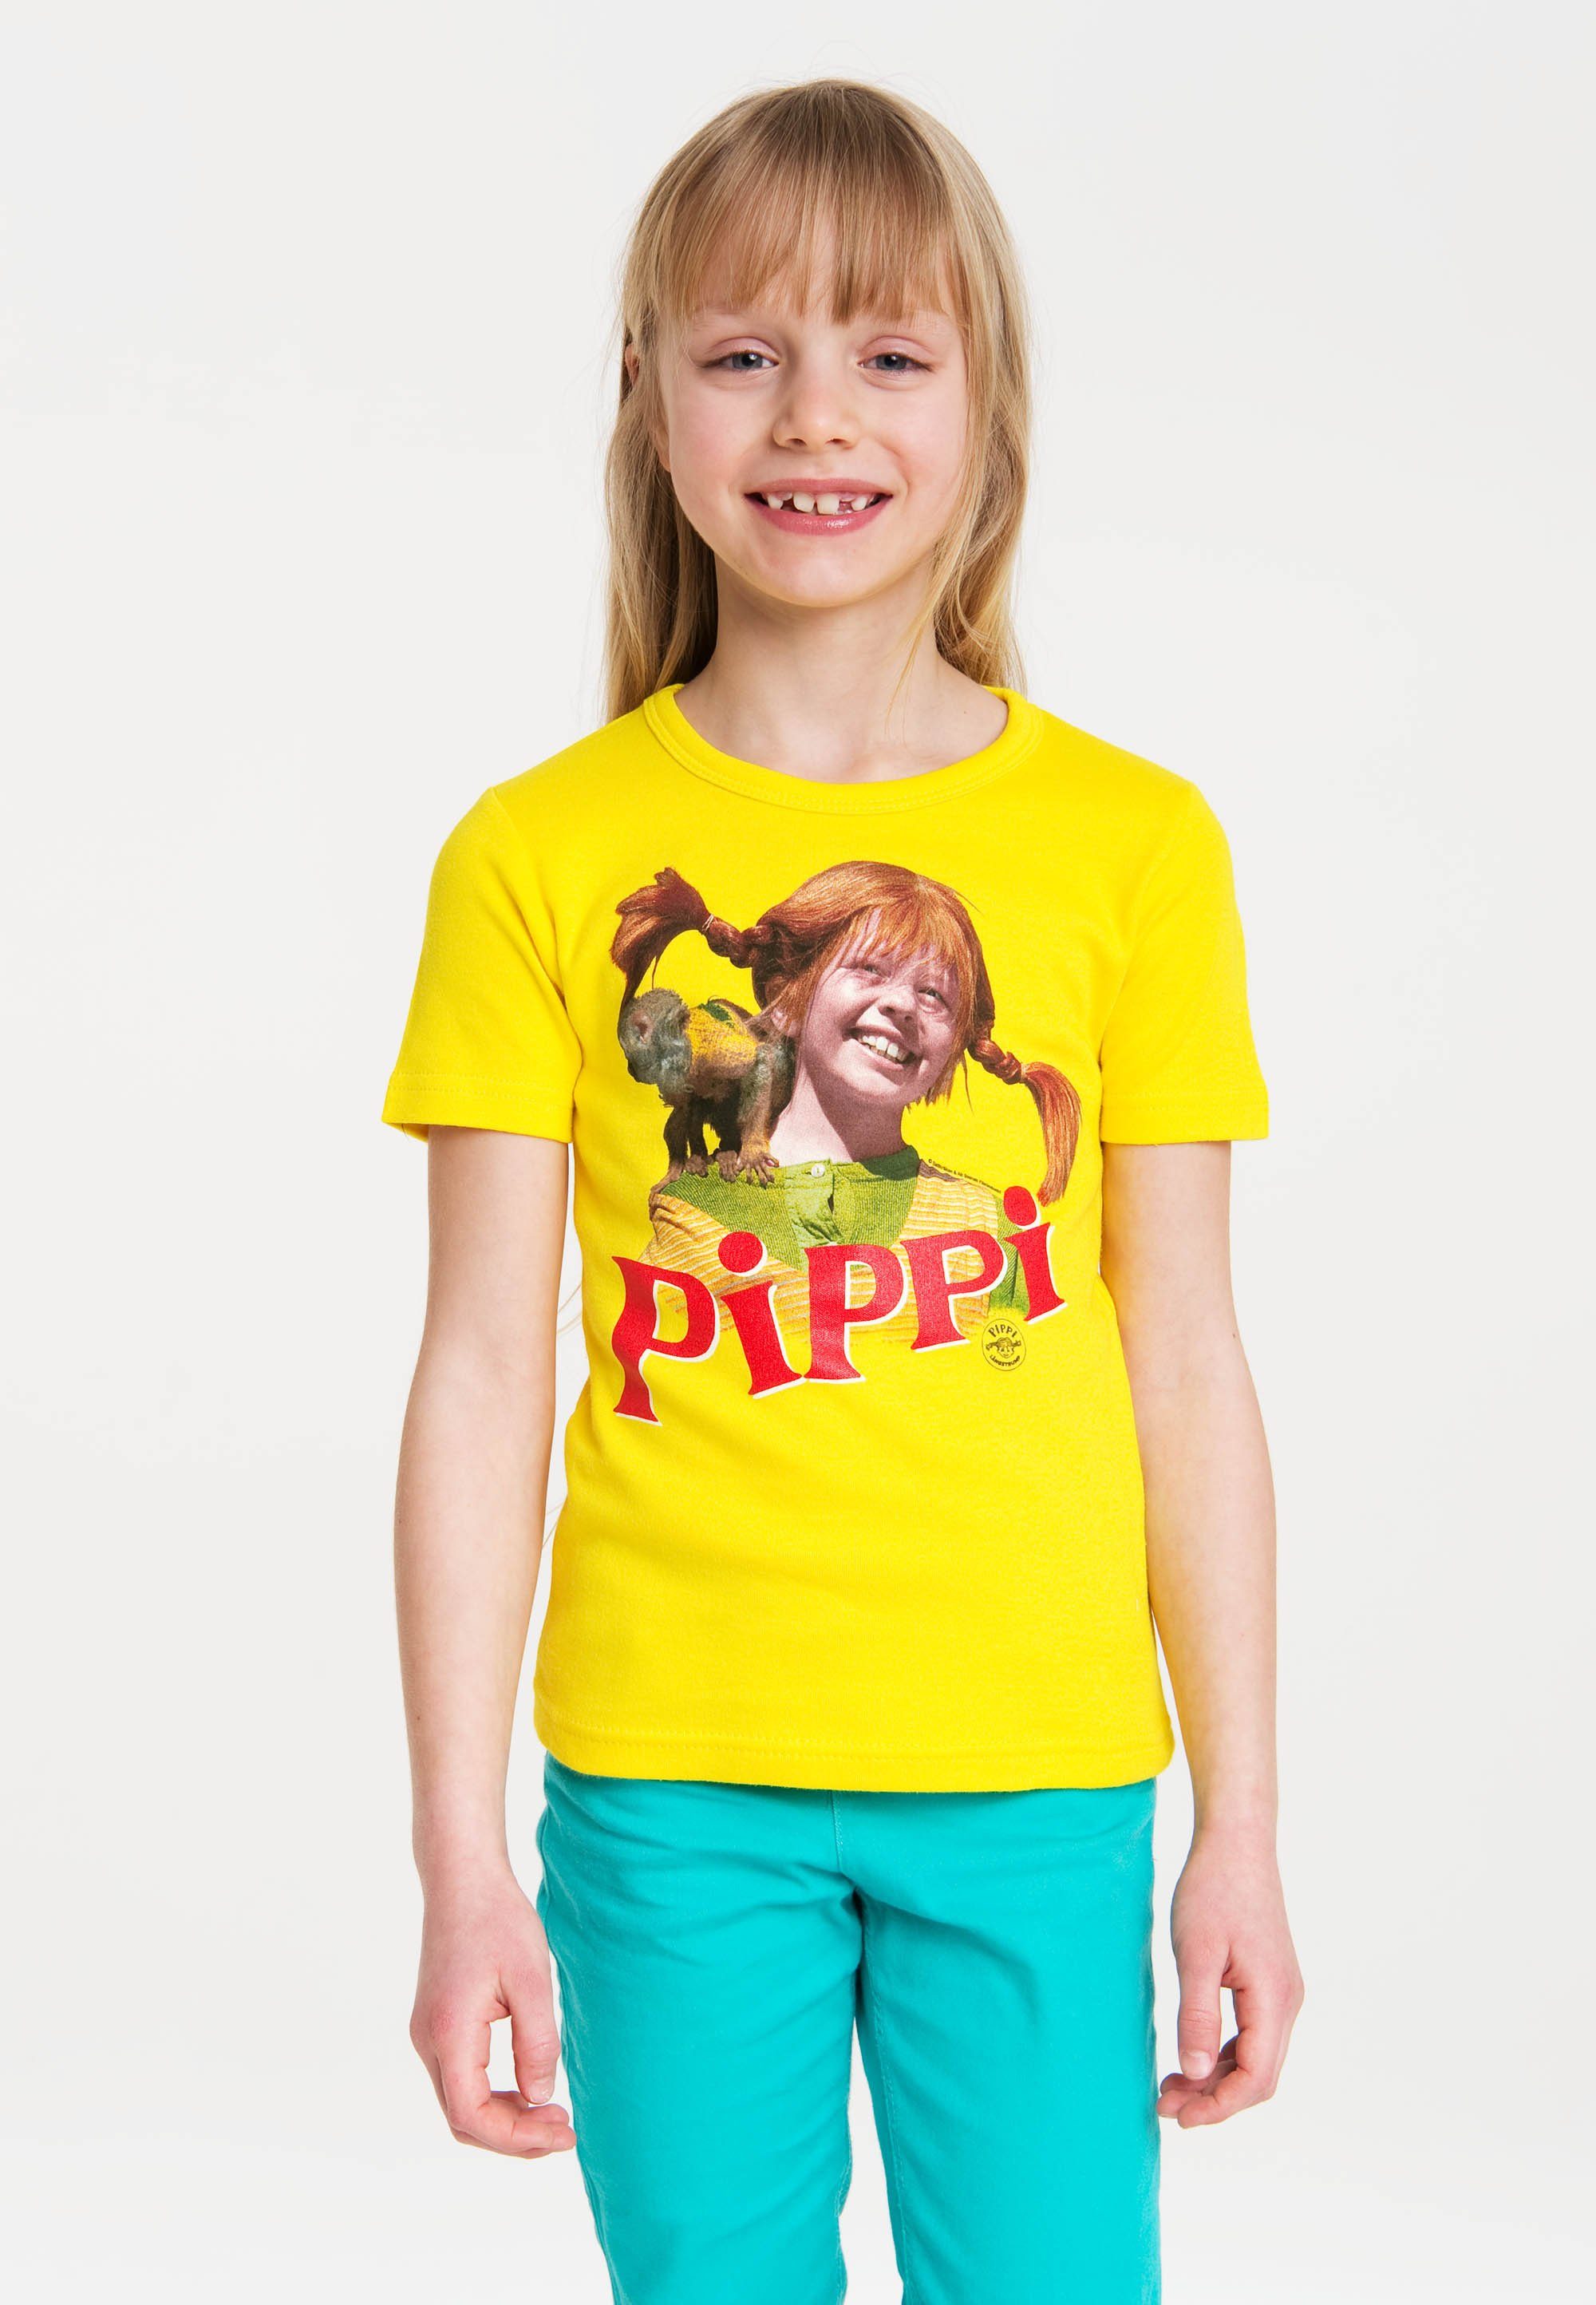 LOGOSHIRT T-Shirt Pippi Langstrumpf & Herr Nilsson mit Langstrumpf-Frontdruck gelb-rot | T-Shirts